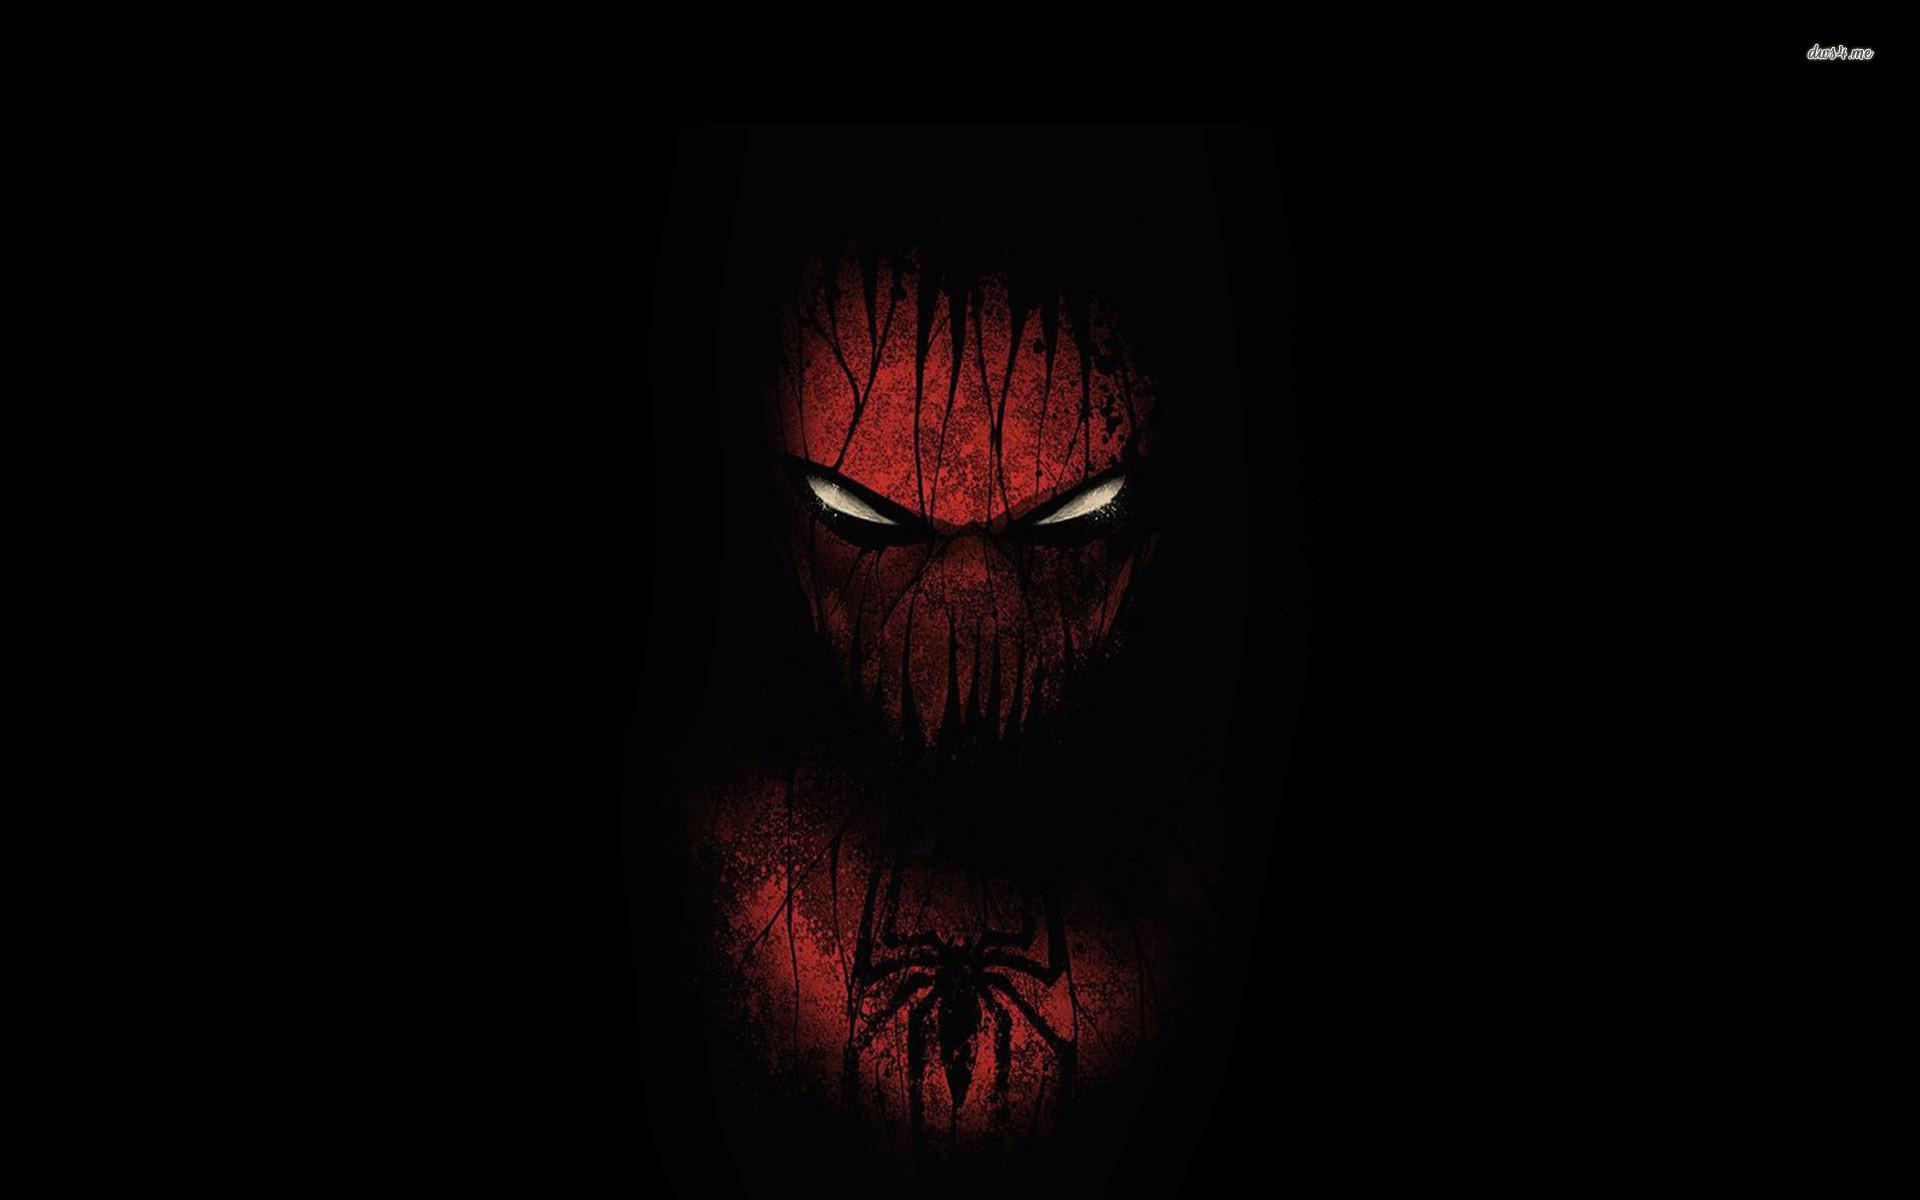 Spiderman wallpaper for desktop Gallery